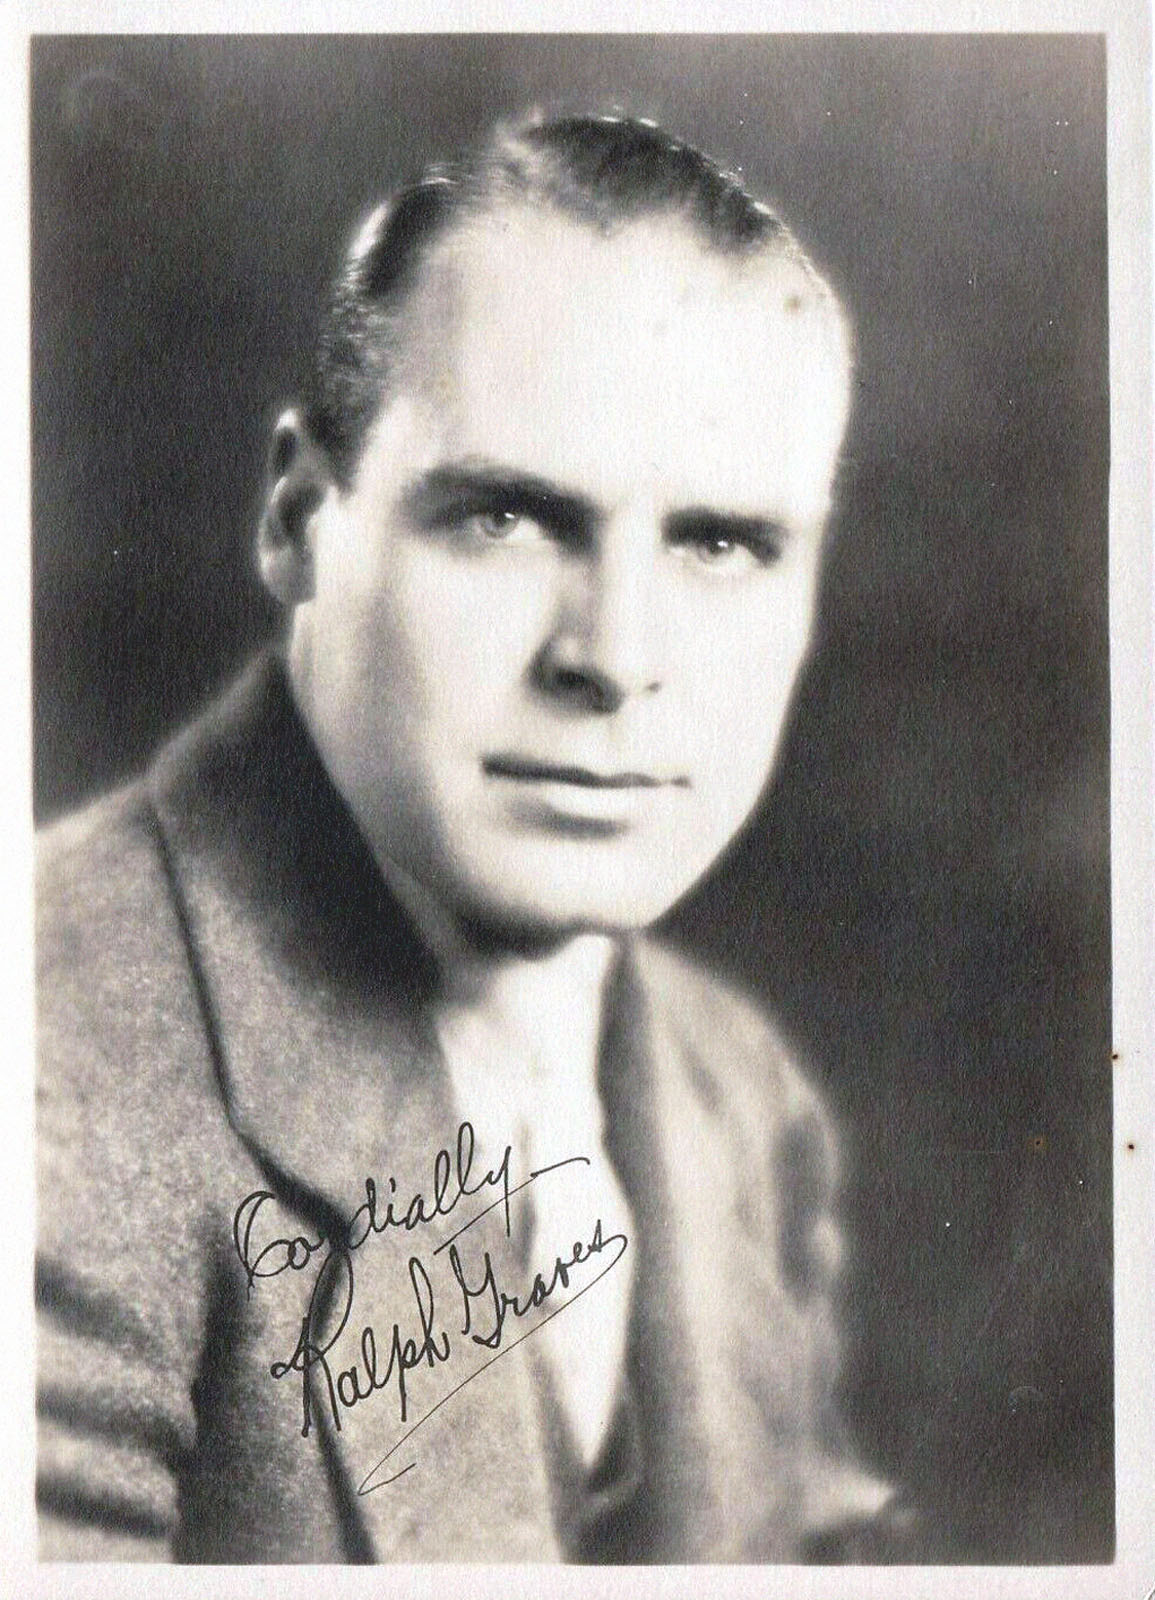 Ralph Graves